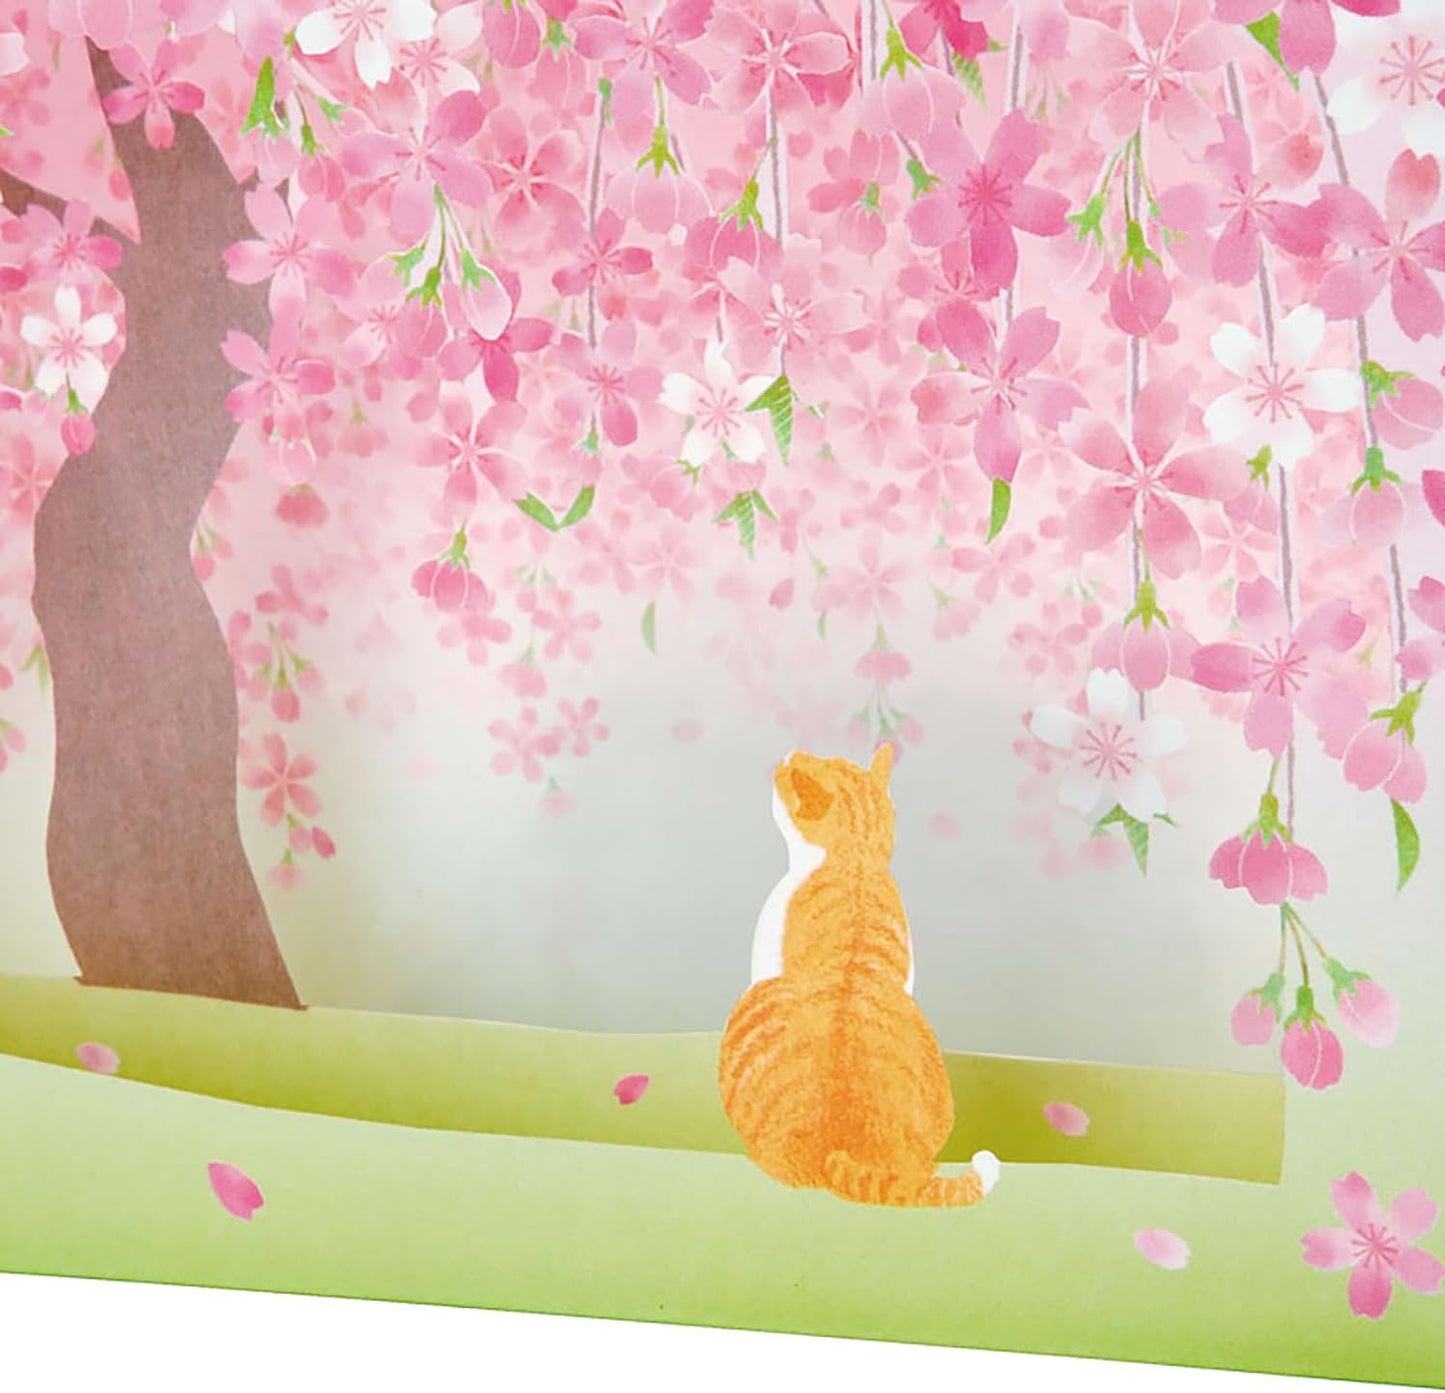 Sanrio Greeting Card: Sakura with cat underneath